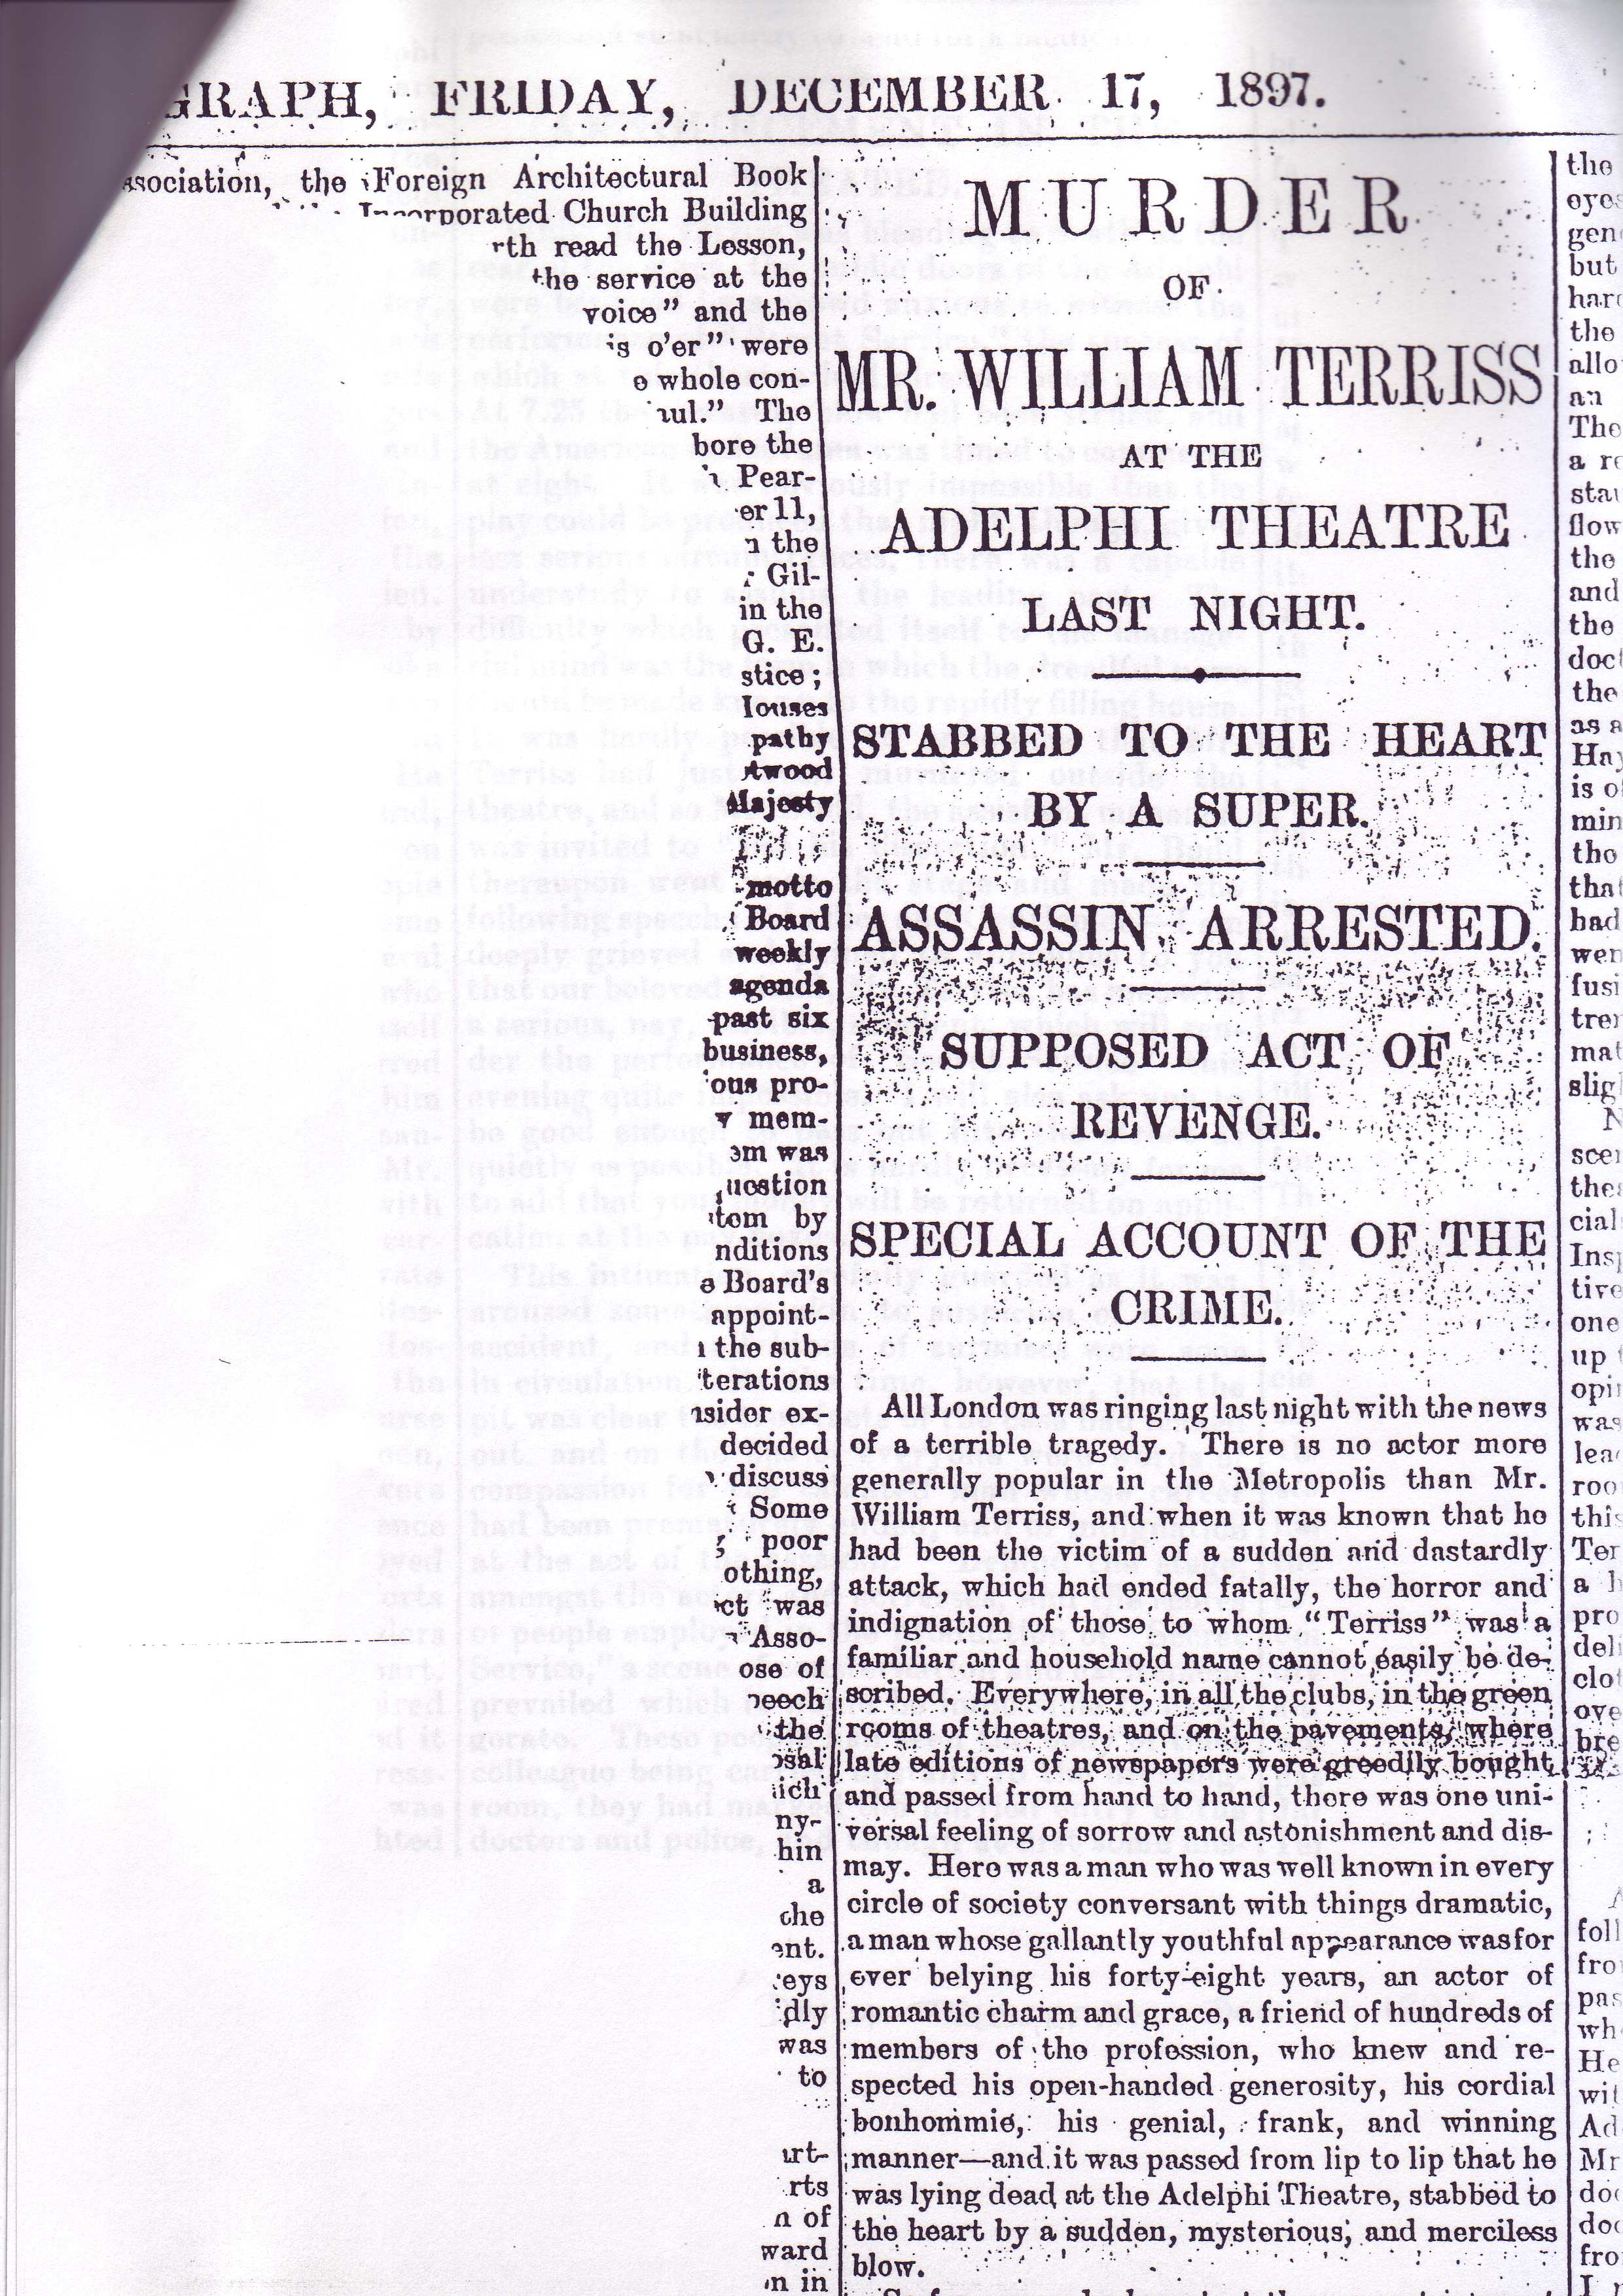 Article re: Terriss murder, Daily Telegraph 17.12.1897 